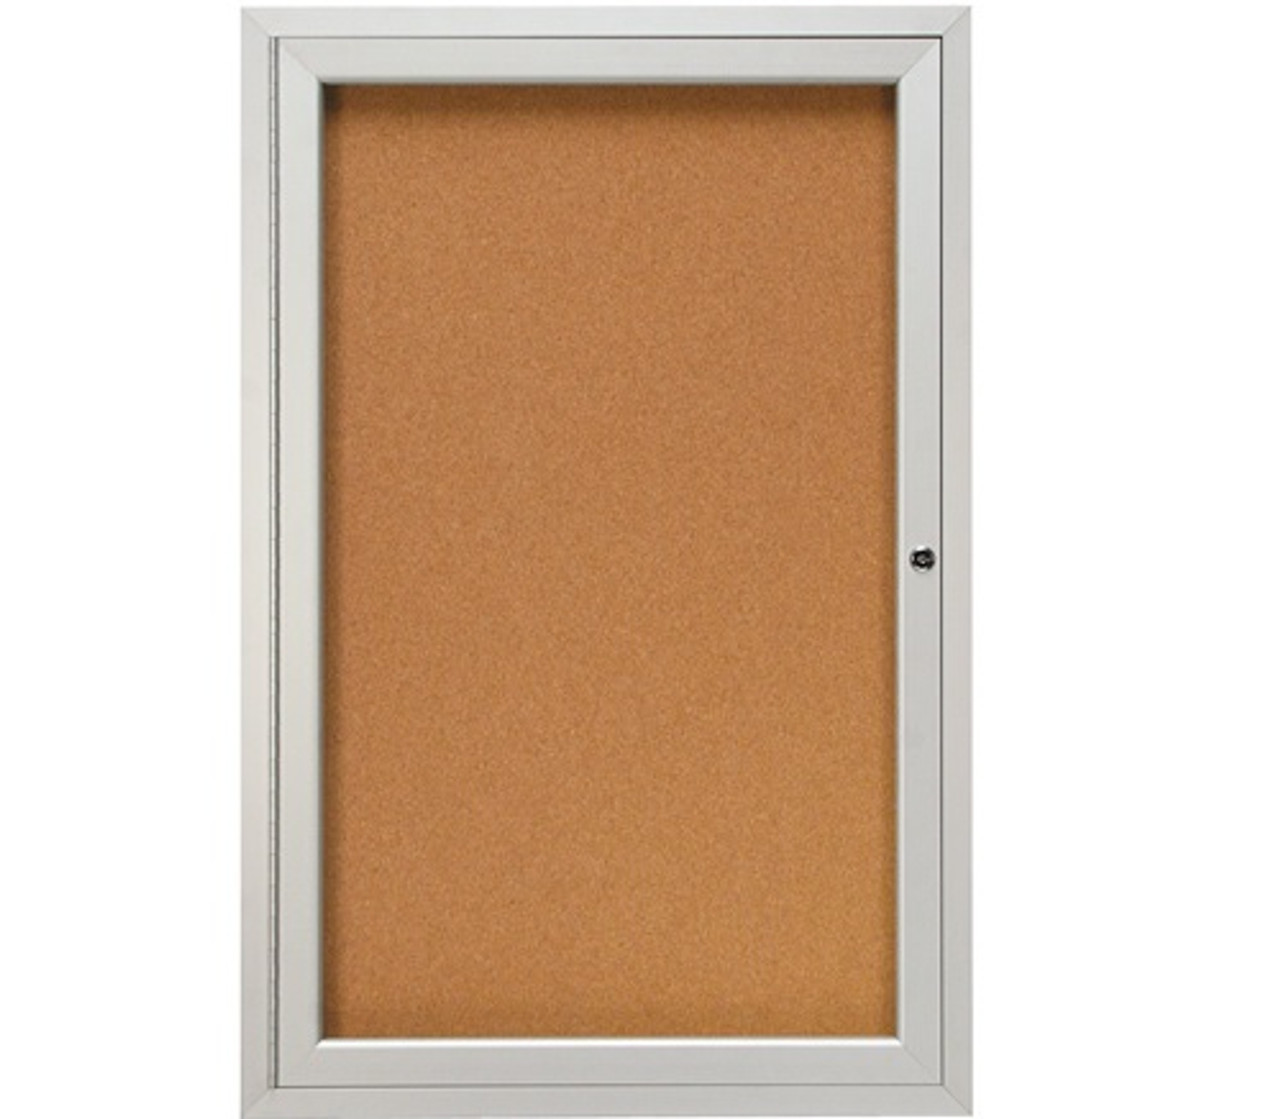 2' x 3' Enclosed Cork Bulletin Board with Locking Aluminum Frame